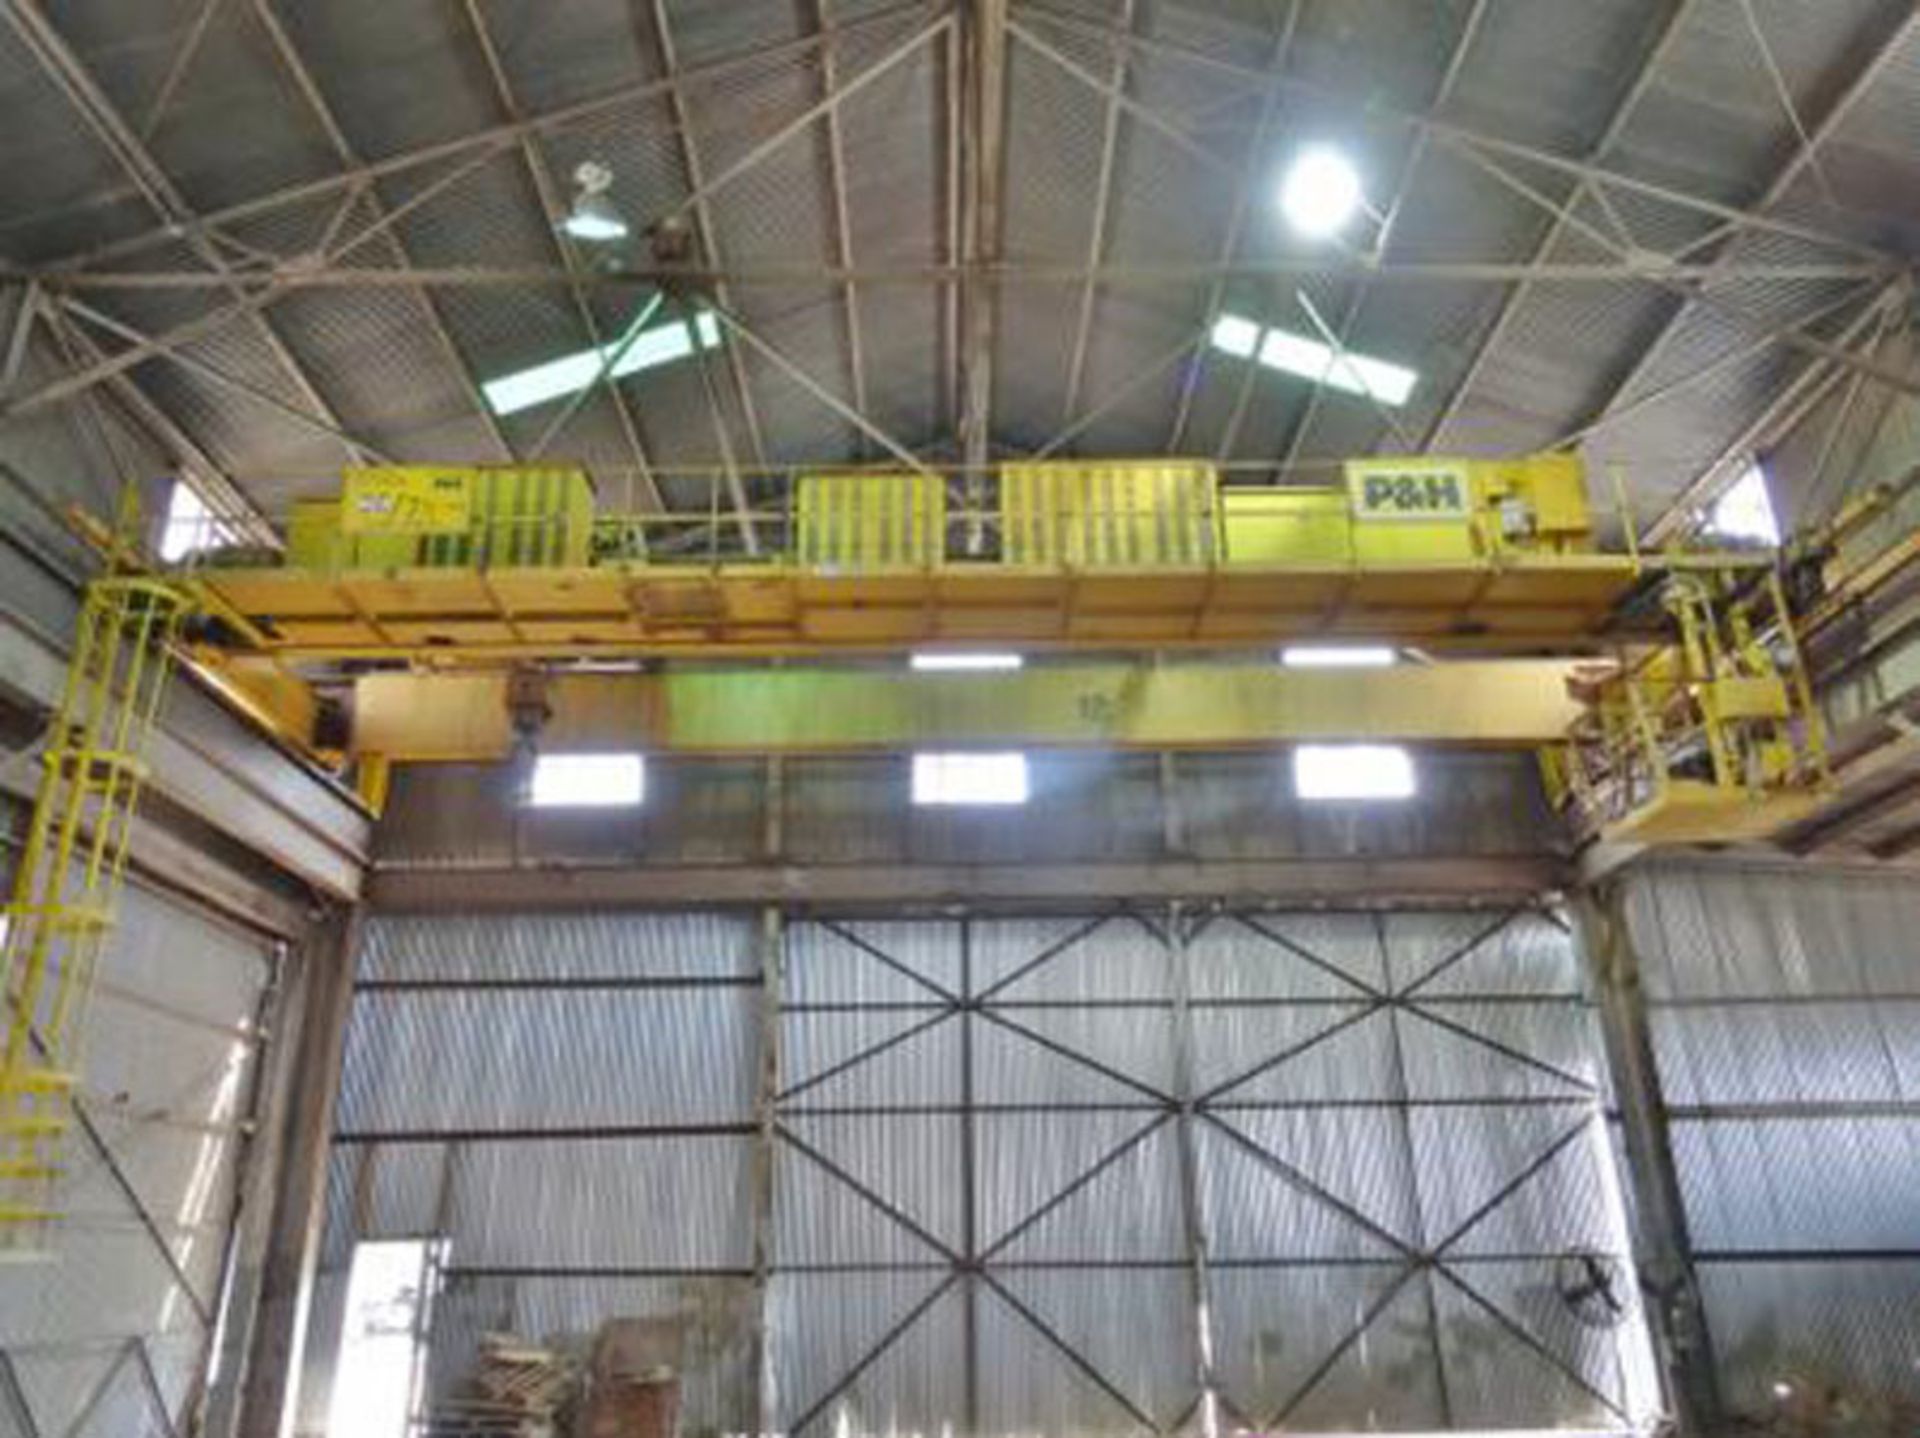 P & H Double Girder Top Running Bridge Crane, 35 Ton x 56' 8" (Located In Oklahoma City, OK) (6905) - Image 2 of 4